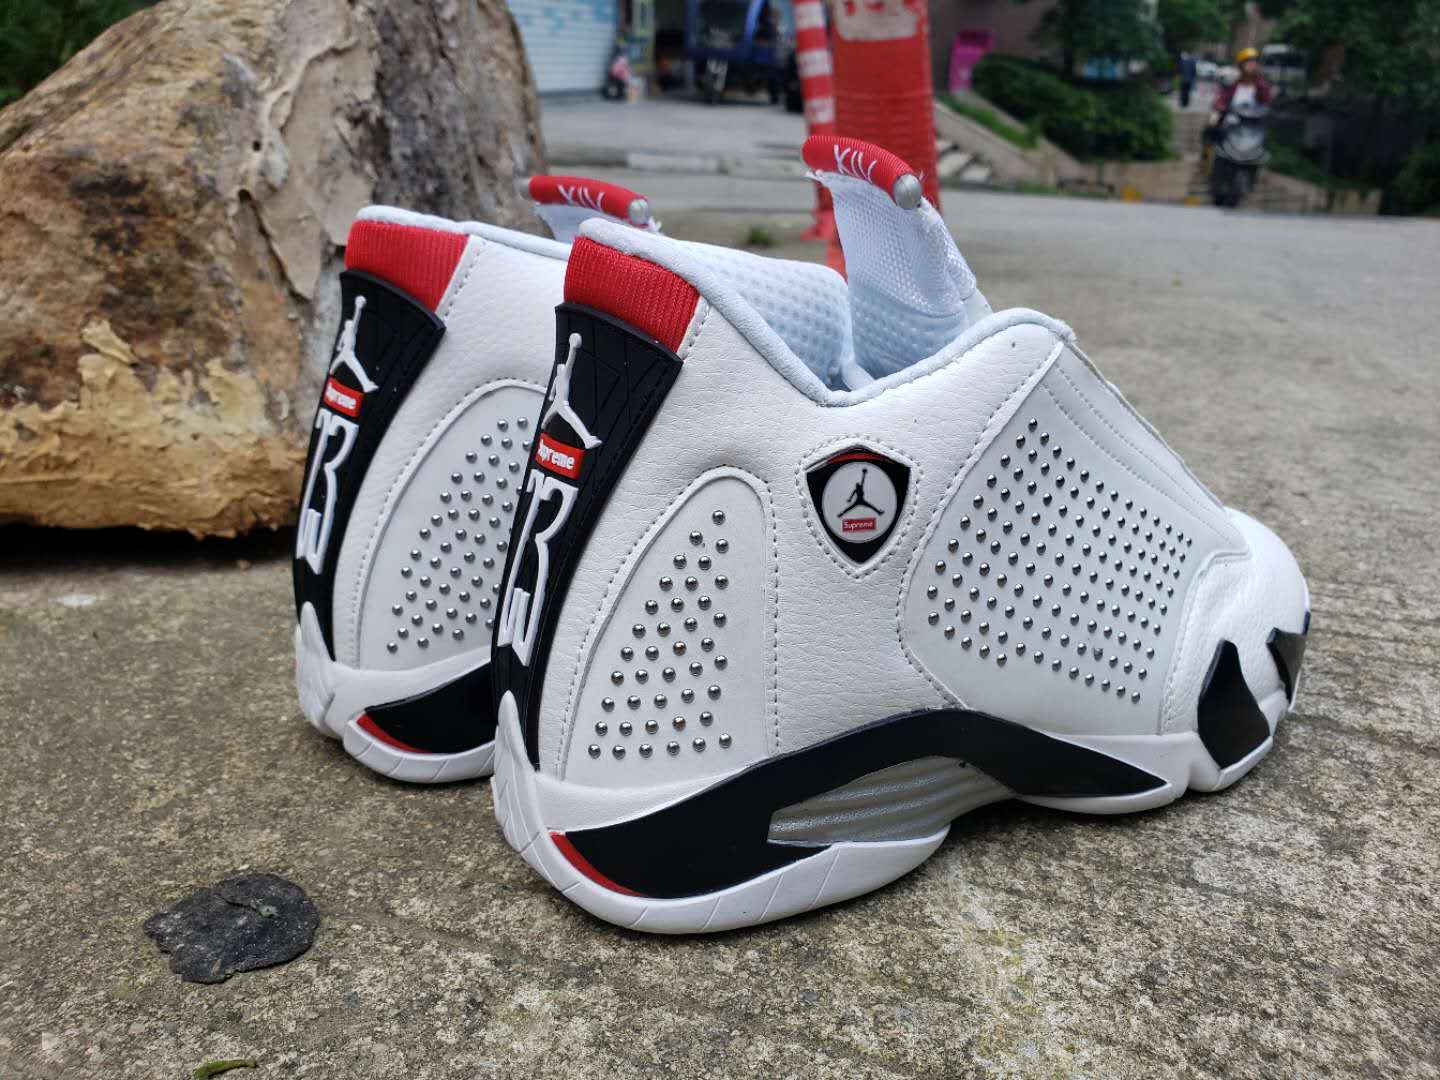 Cheap 2019 Air Jordan Retro 14 X Supreme Sneakers For Men in 208287, cheap Jordan14, only $65!